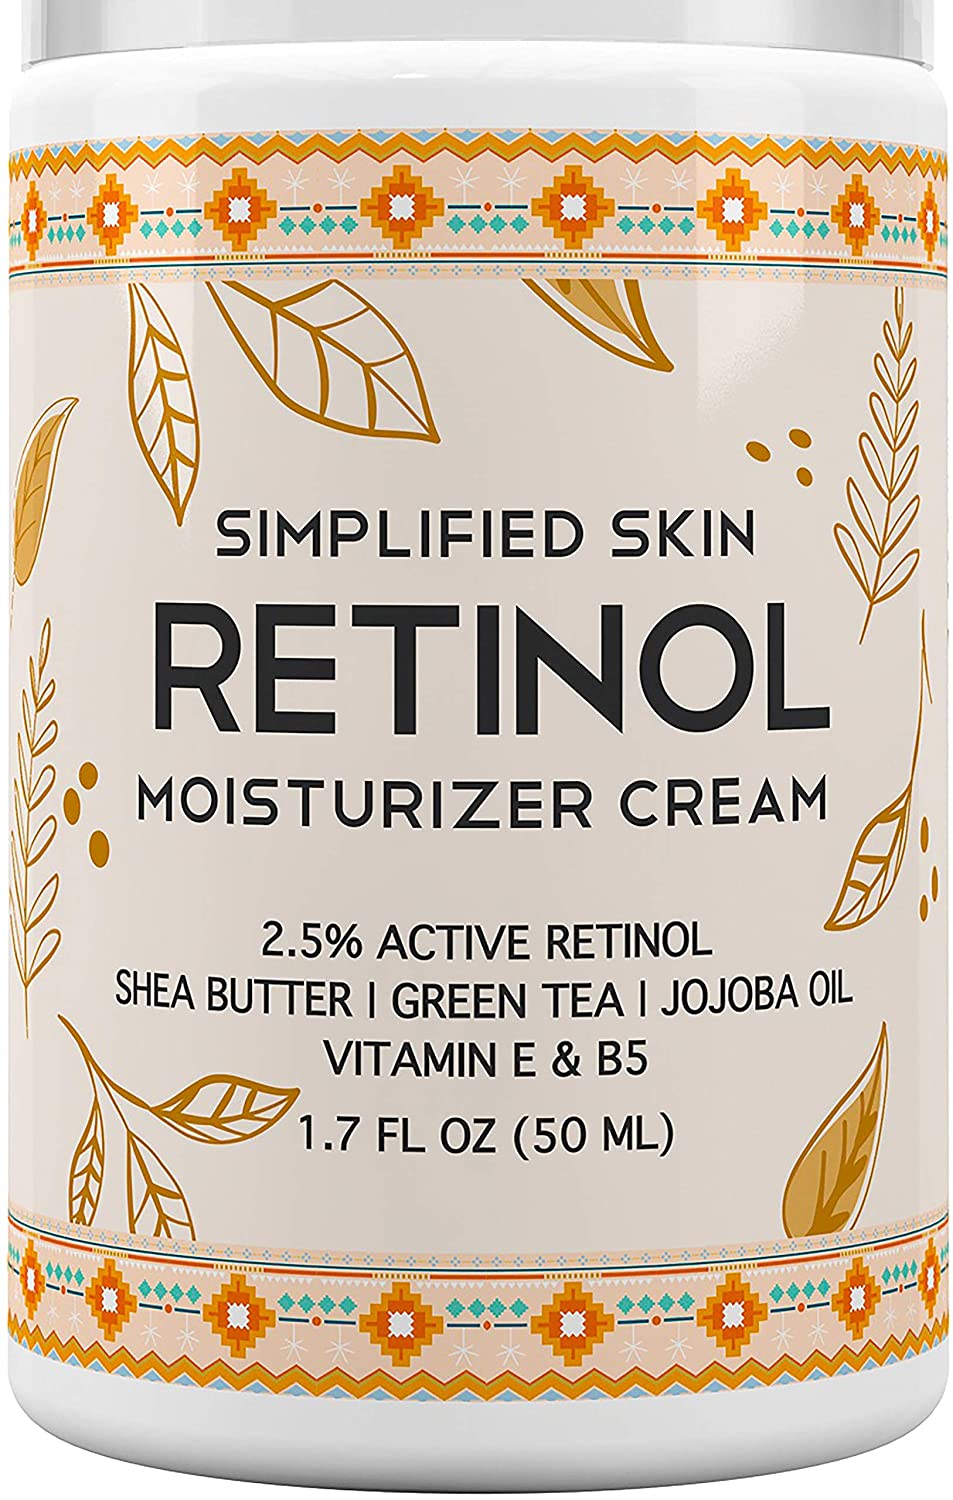 Simplified Skin Retinol Face Cream Moisturizer, Vitamin E & Hyaluronic Acid Face Moisturizer, 1.7 oz. - image 1 of 6